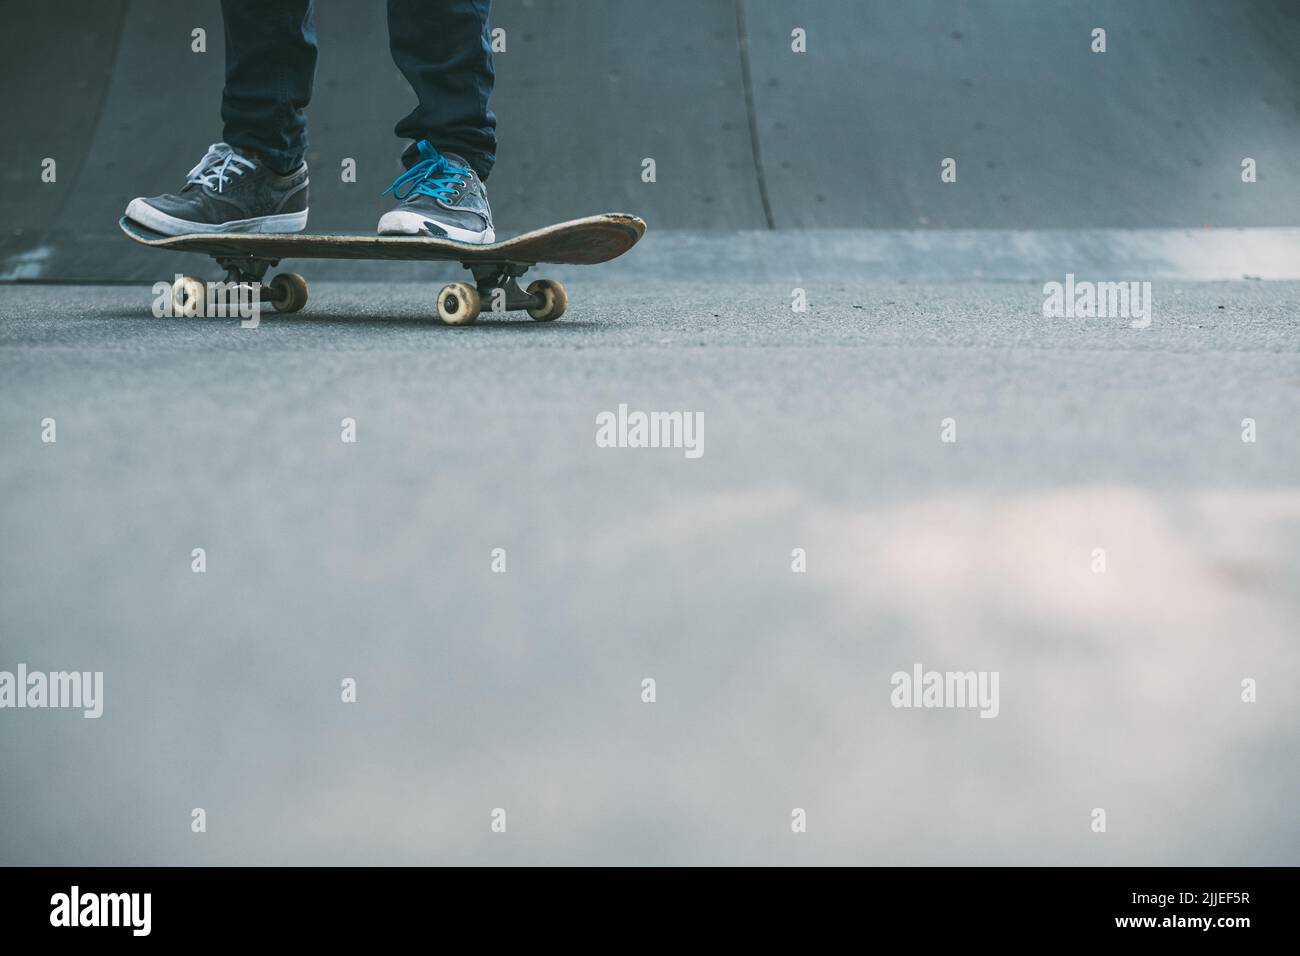 uomo piedi skateboard rampa urbano hipster lifestyle Foto Stock